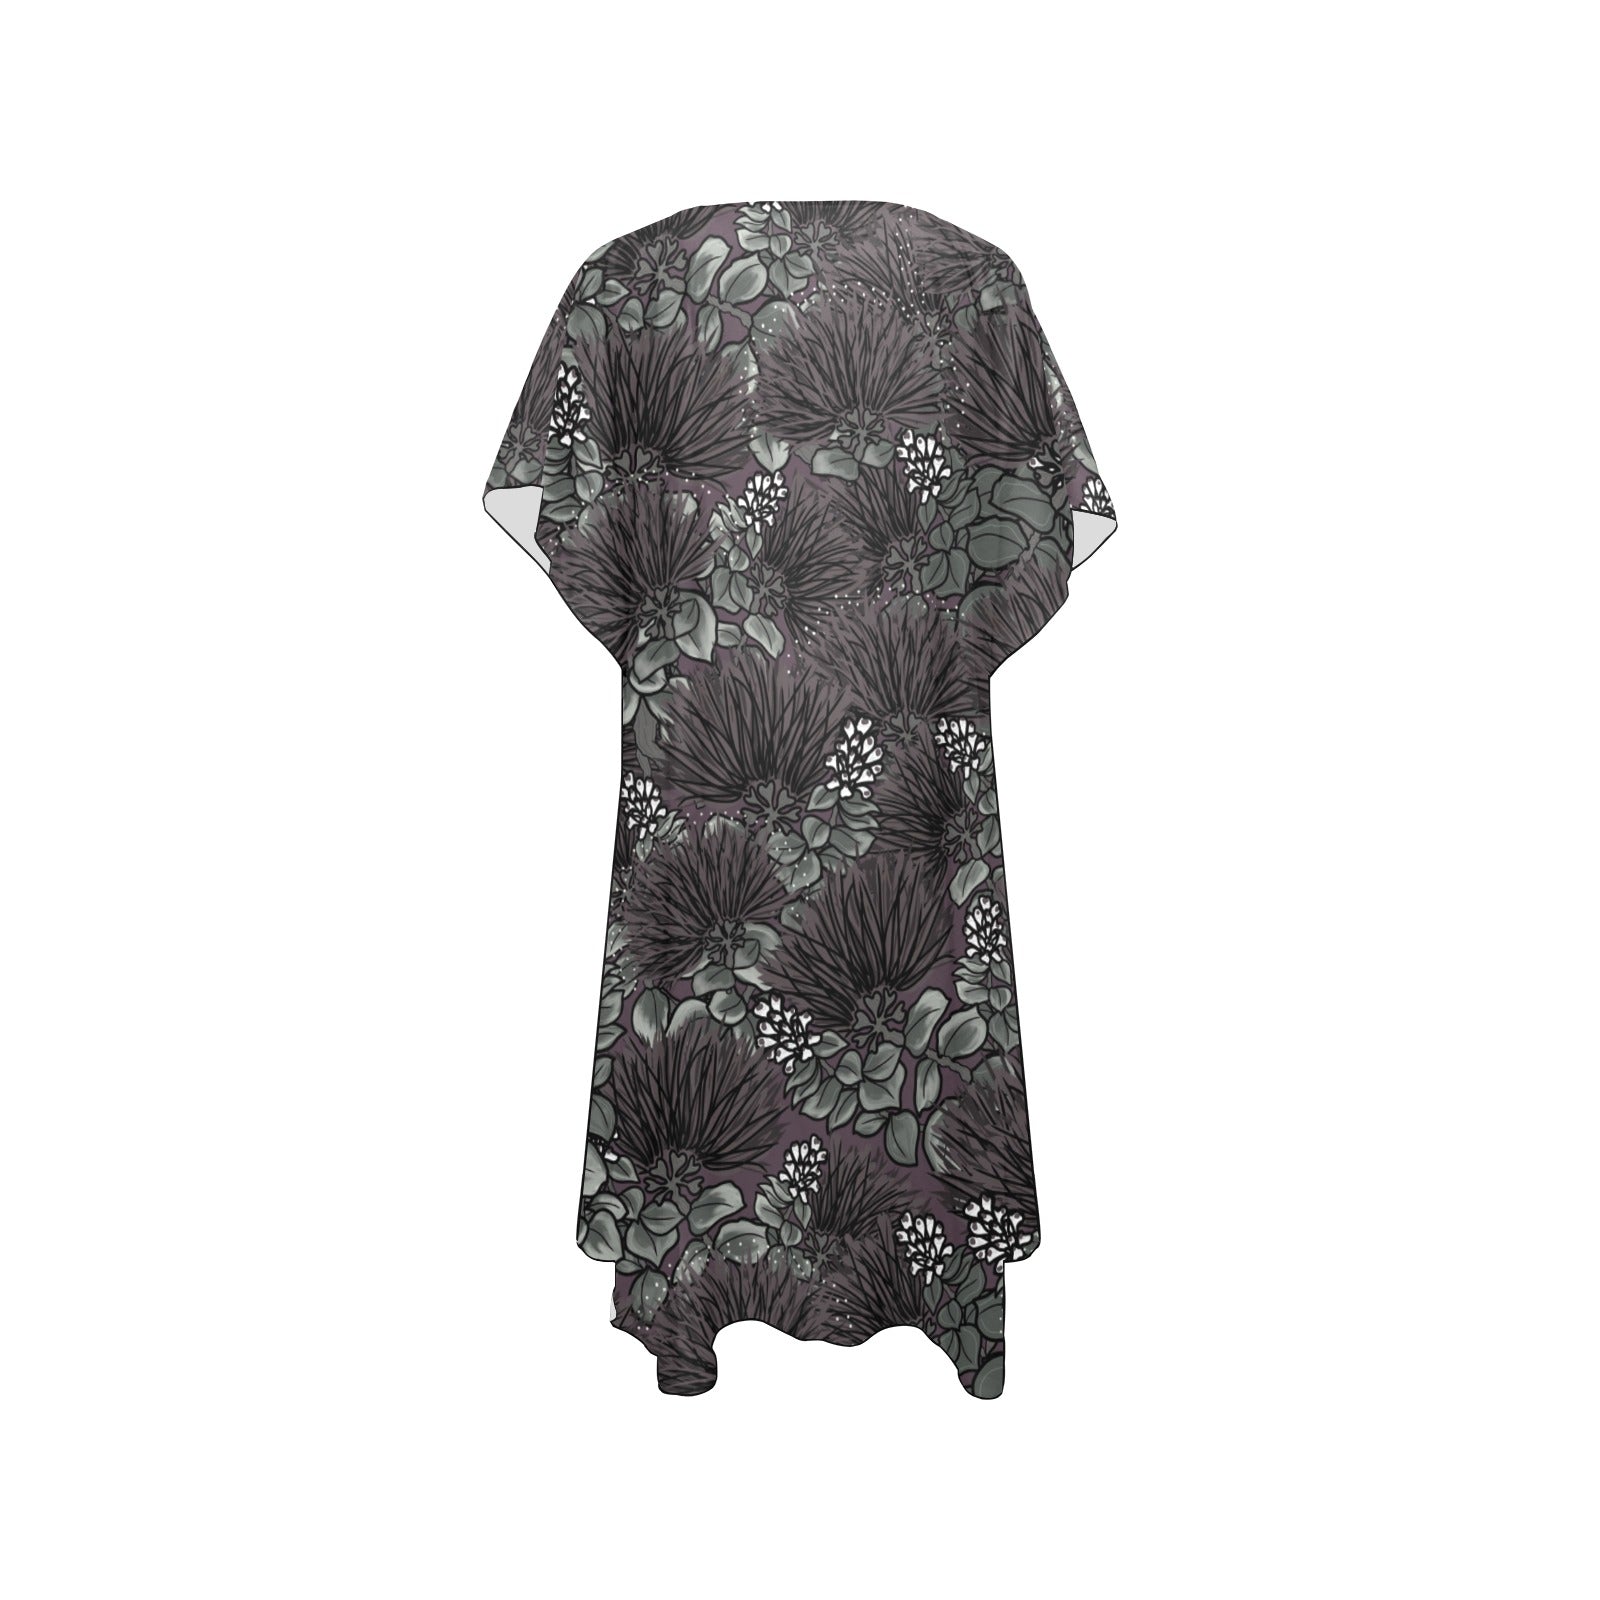 'Ohi'a Lehua Design Mid-Length Side Slit Kimono Coverup Mid-Length Side Slits Chiffon Cover Up